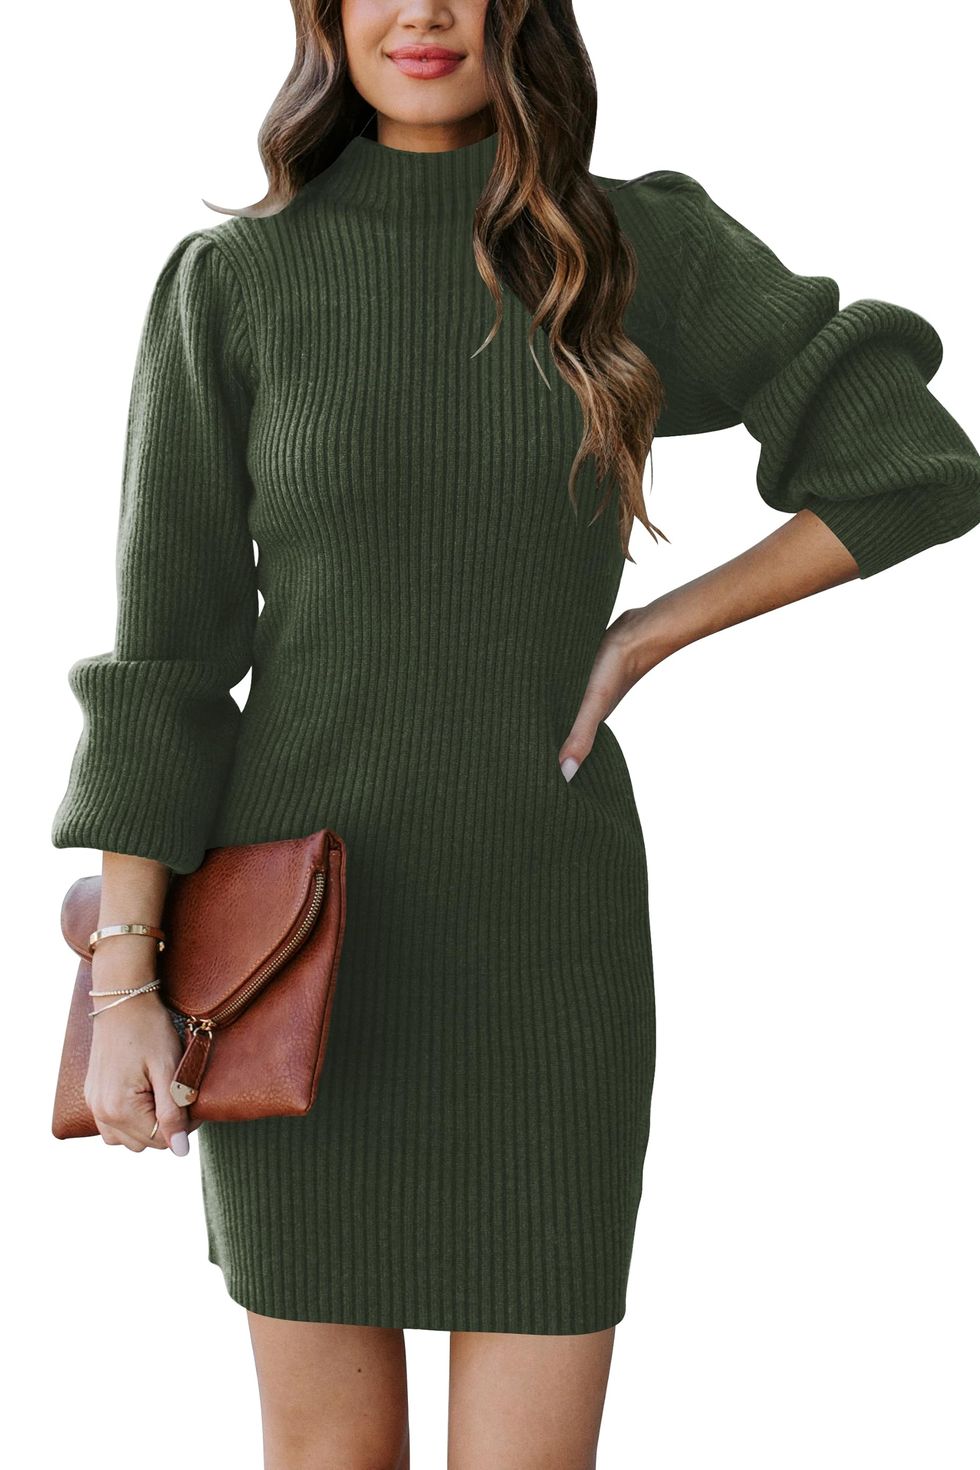 ANRABESS Sweater Dress Long Sleeve 